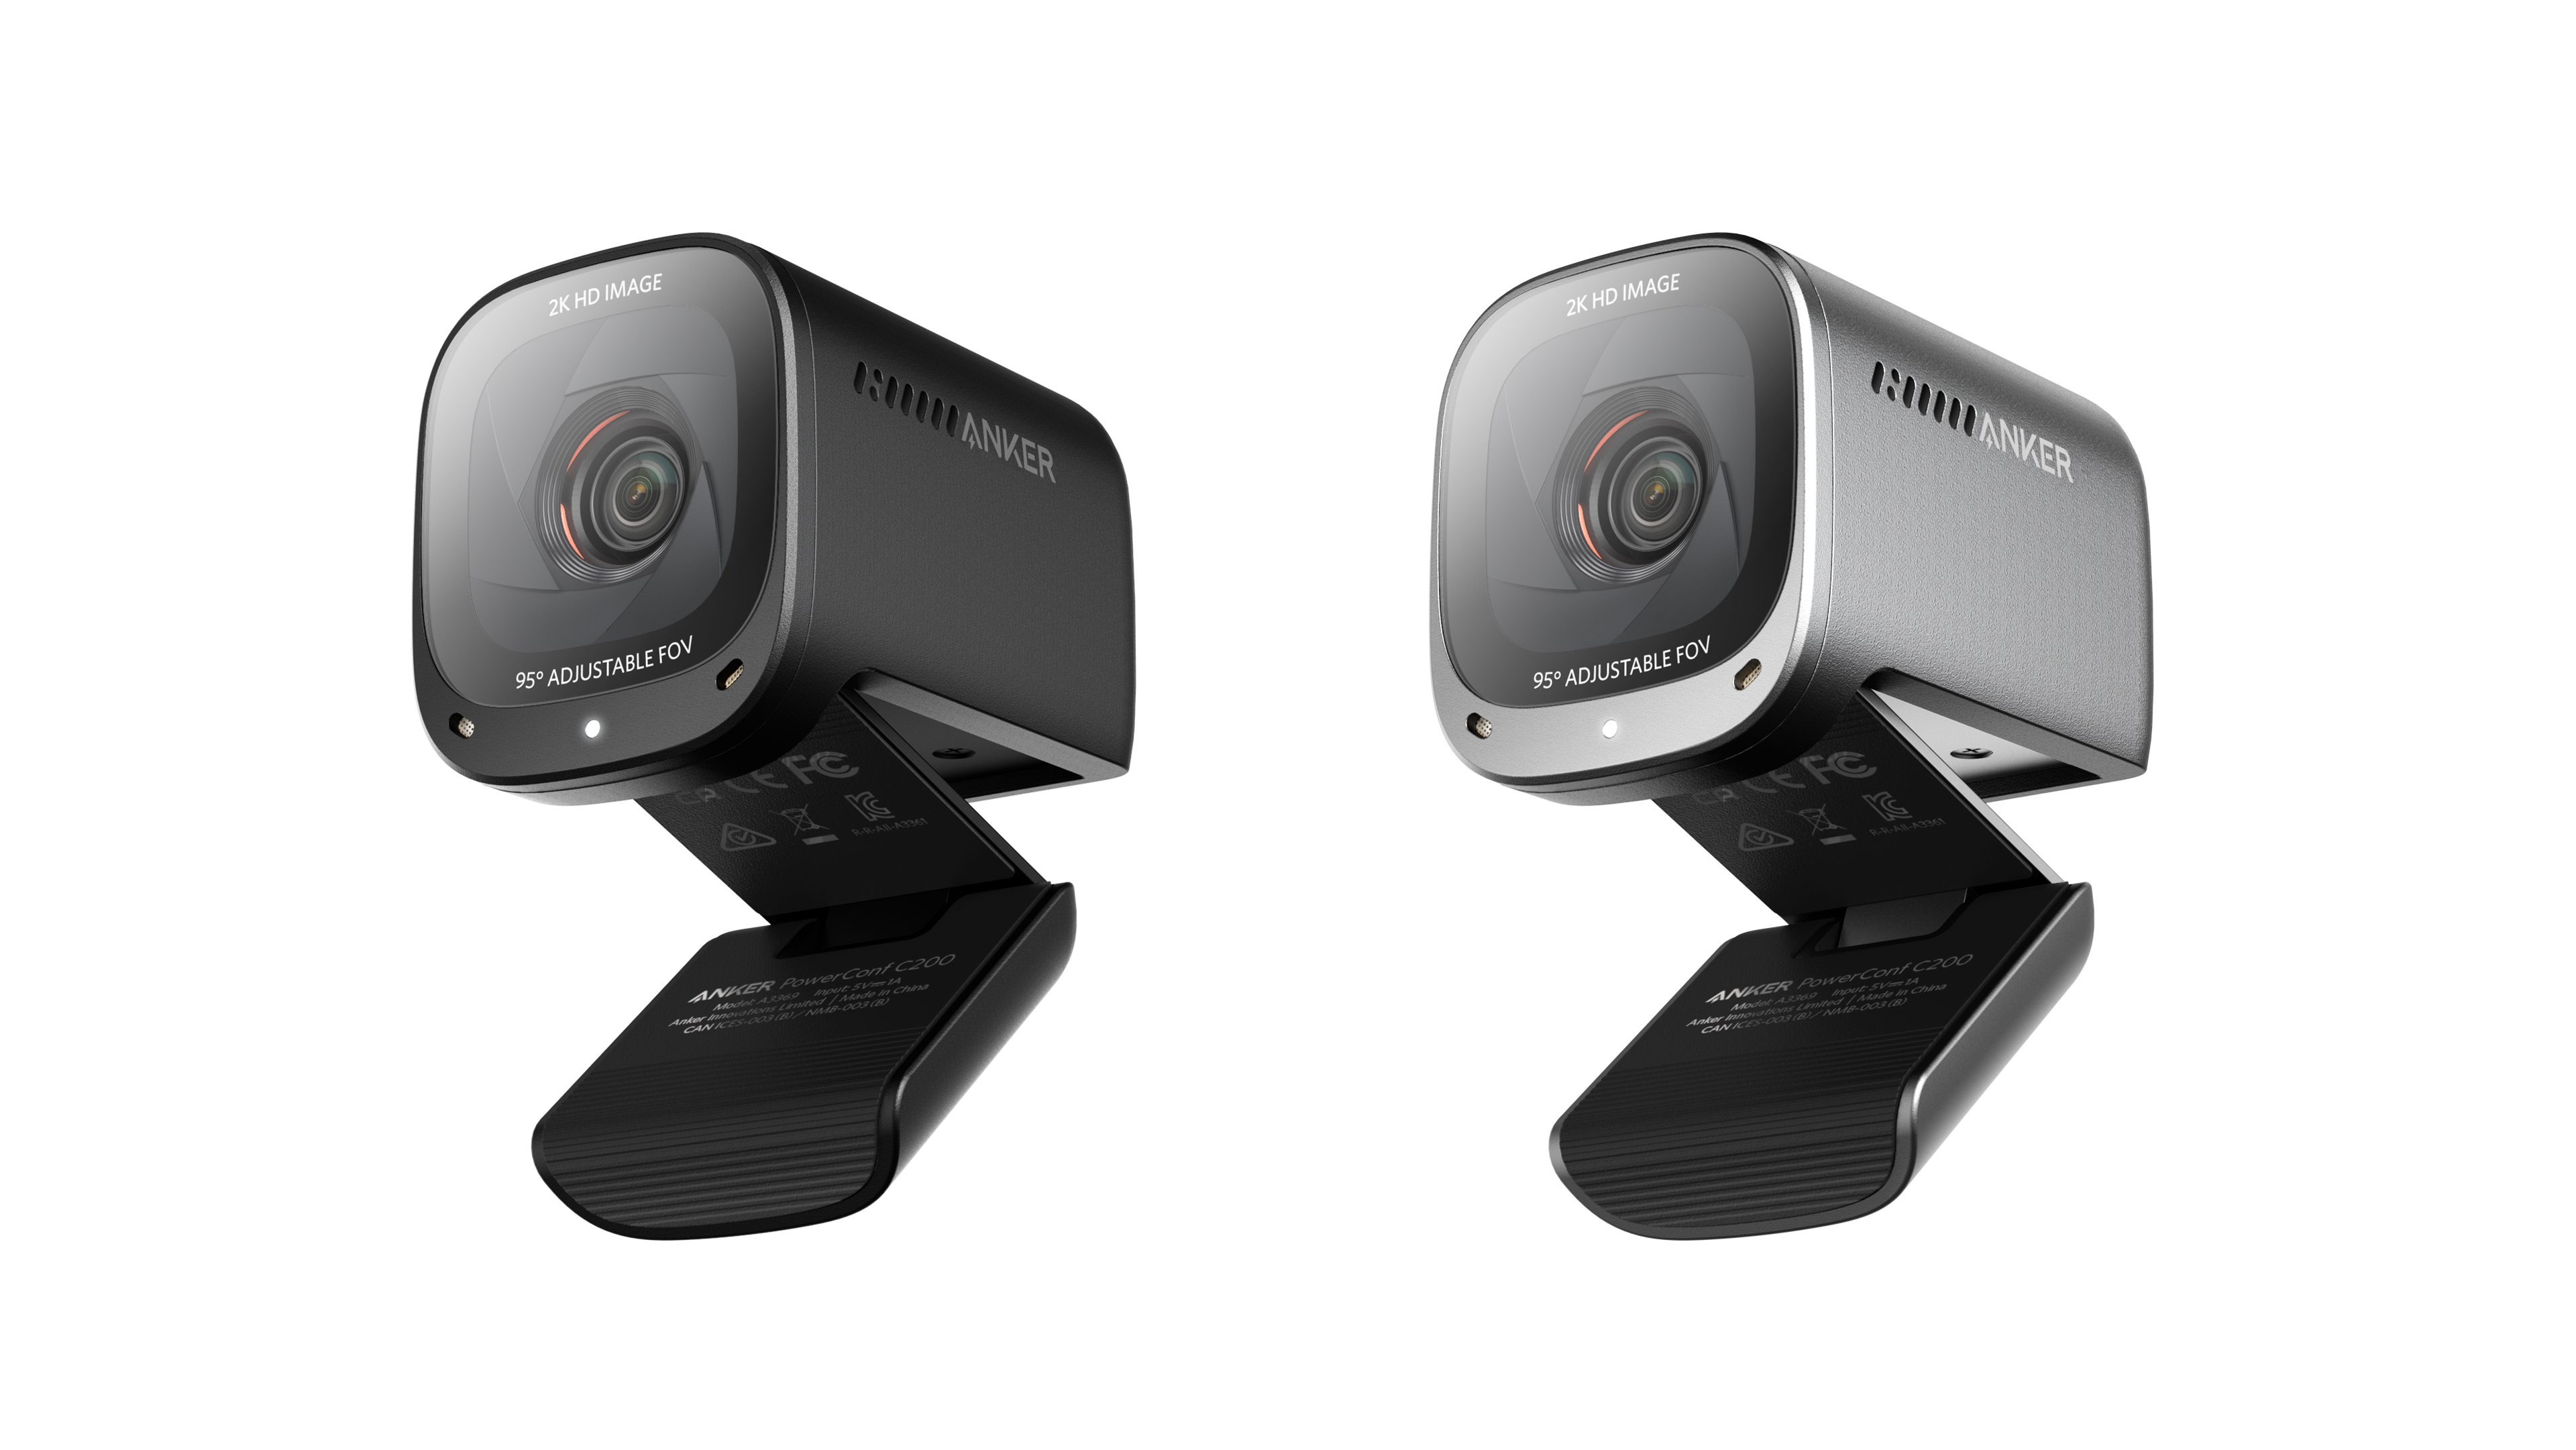 Anker PowerConf C200 2K HD Webcam